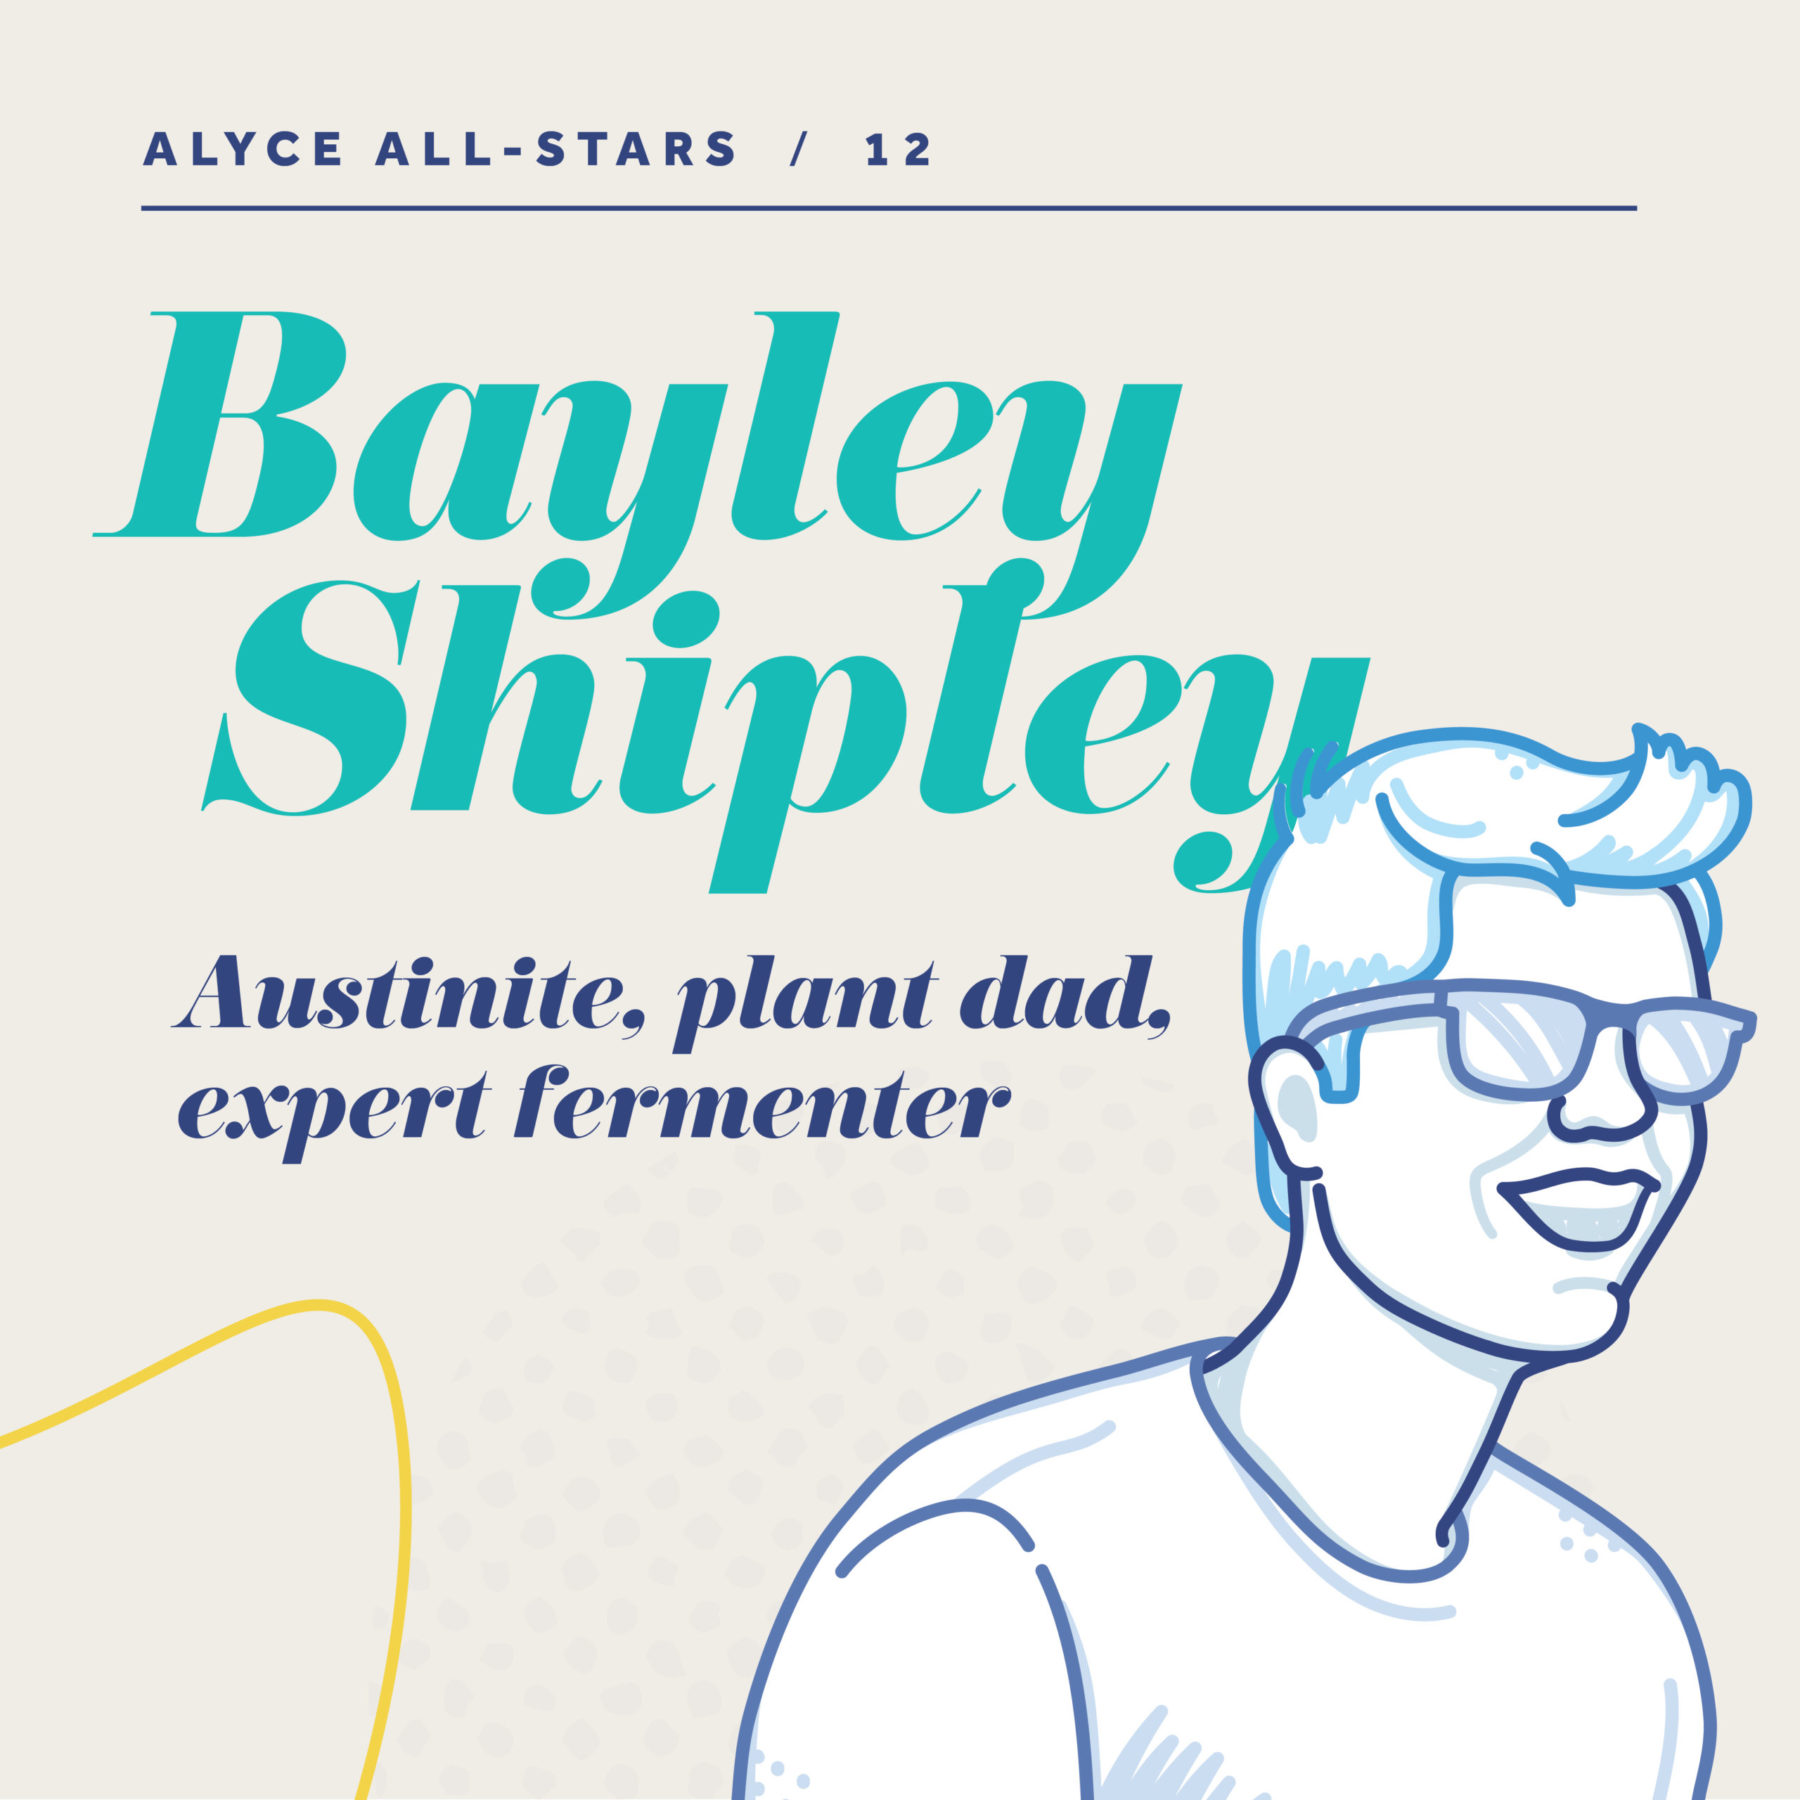 Bayley Shipley All Star